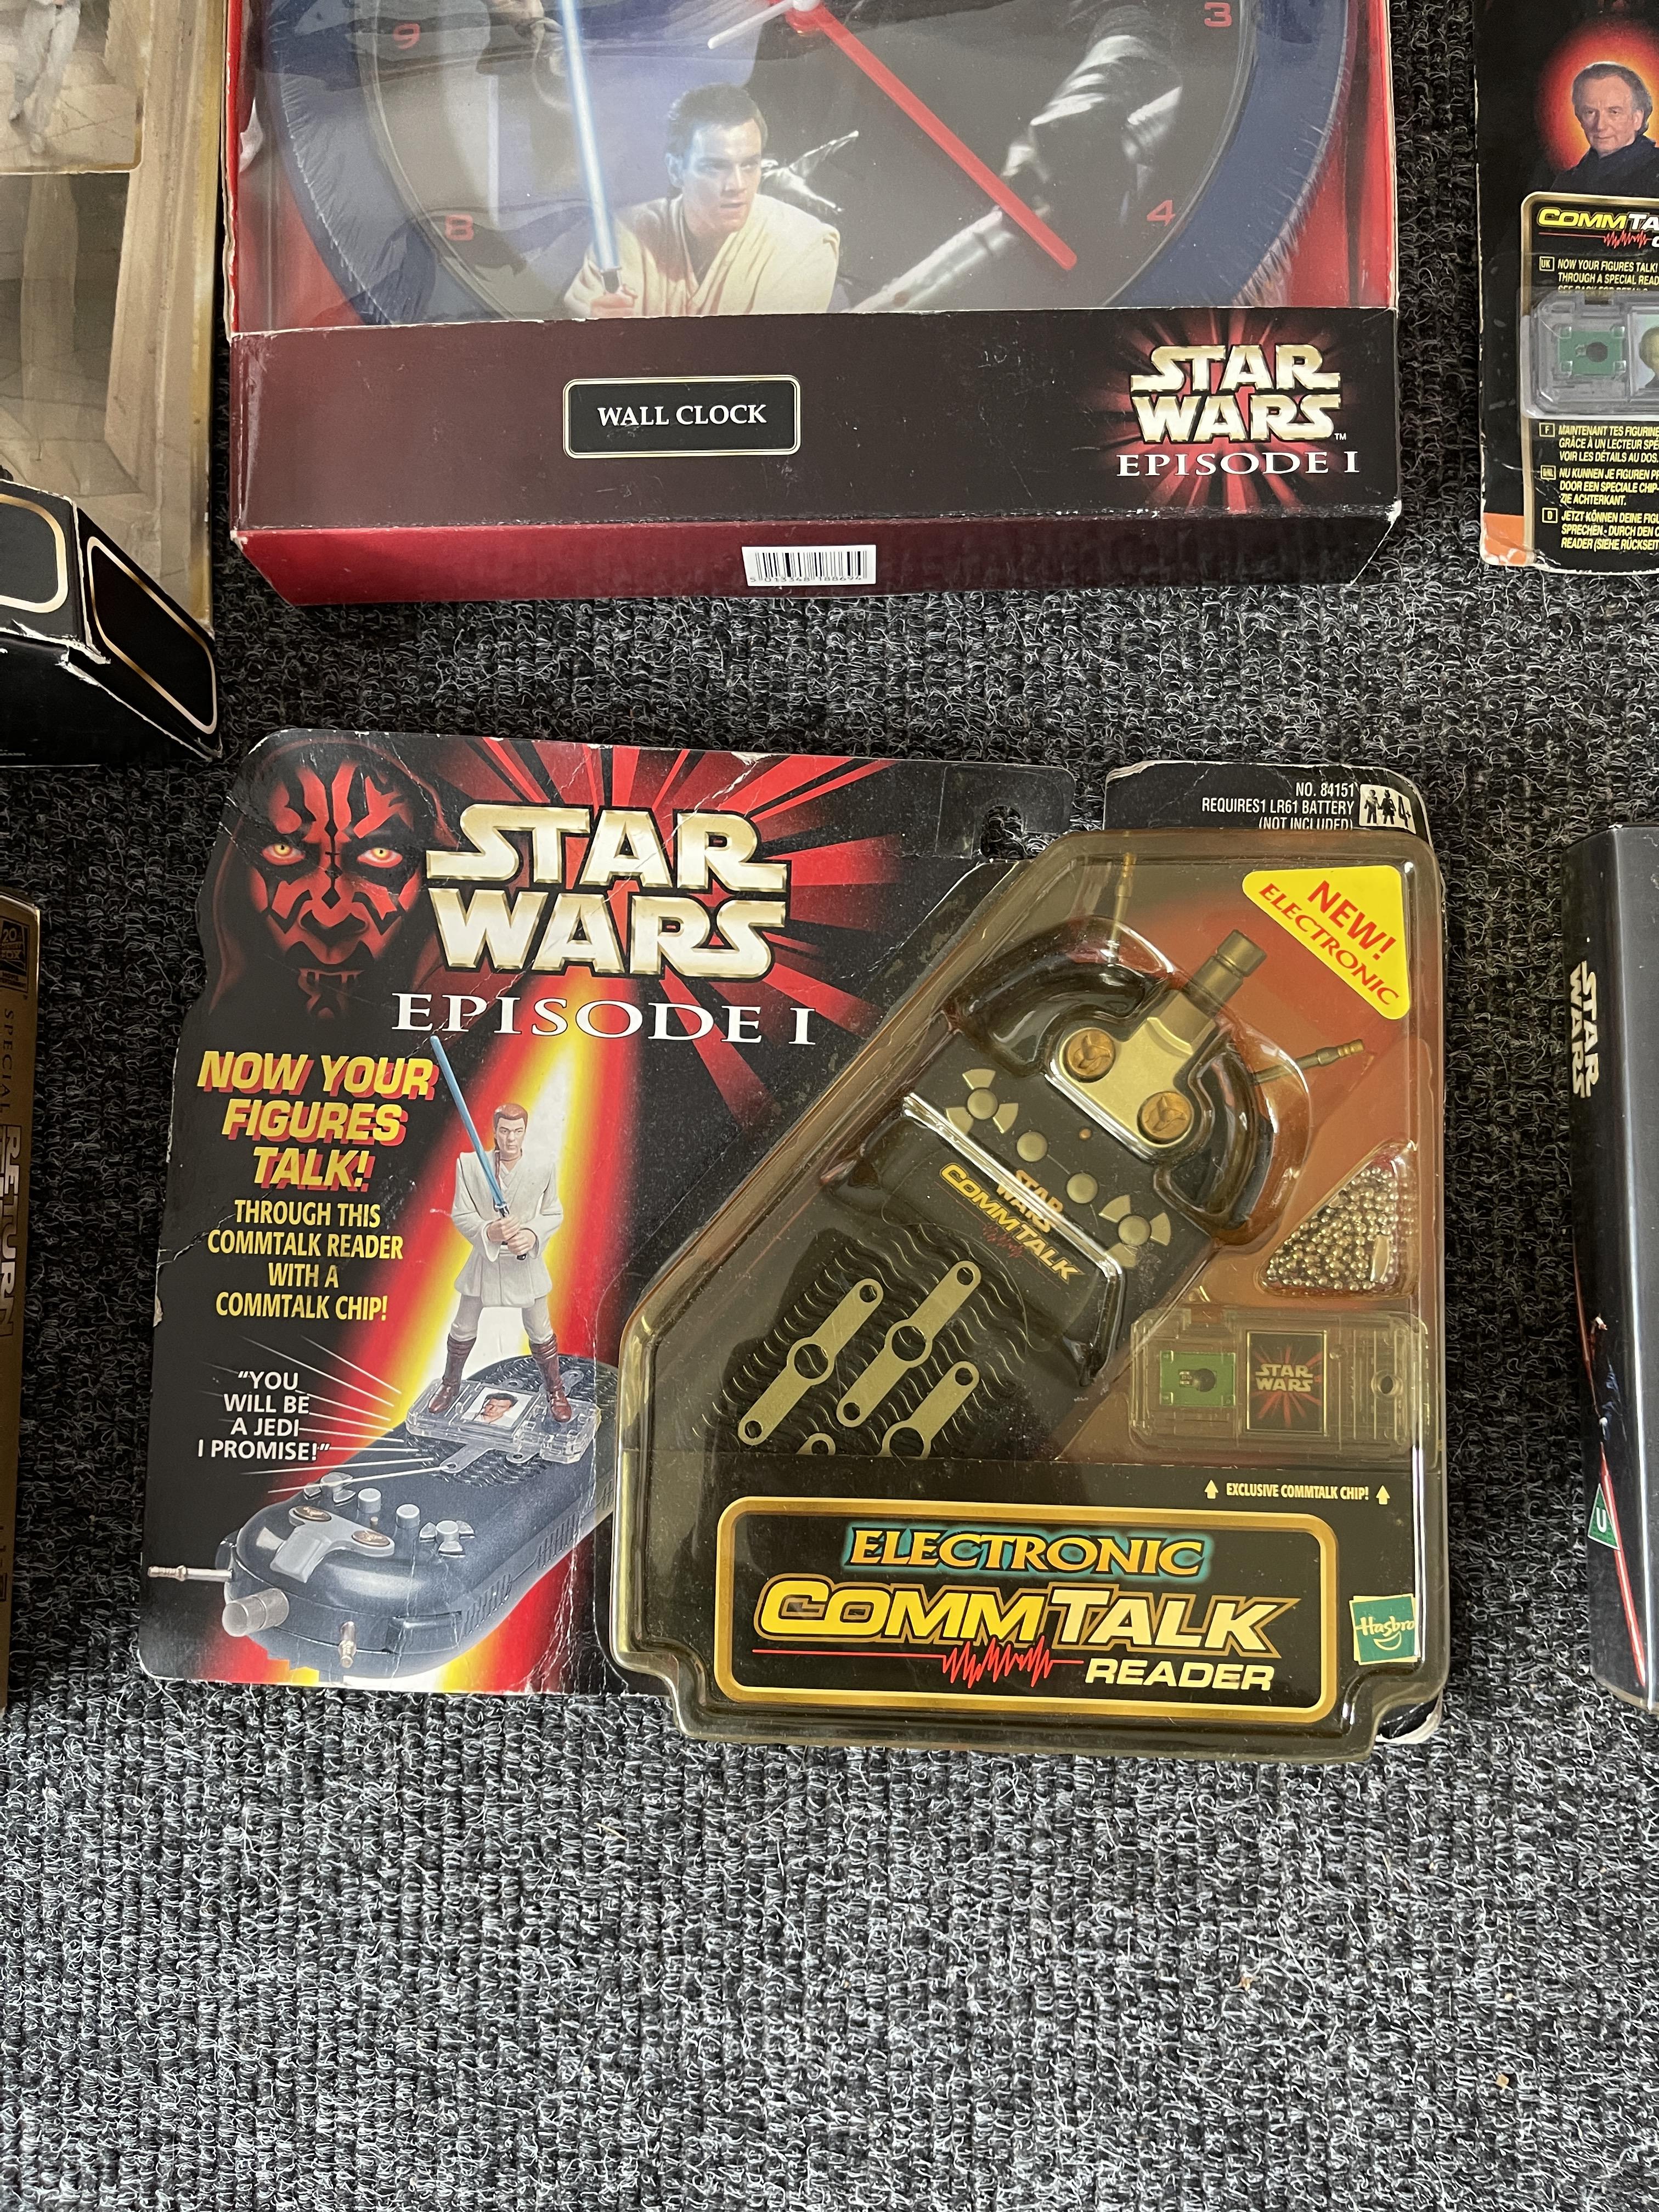 Assortment of Star Wars Memorabilia - Image 8 of 10